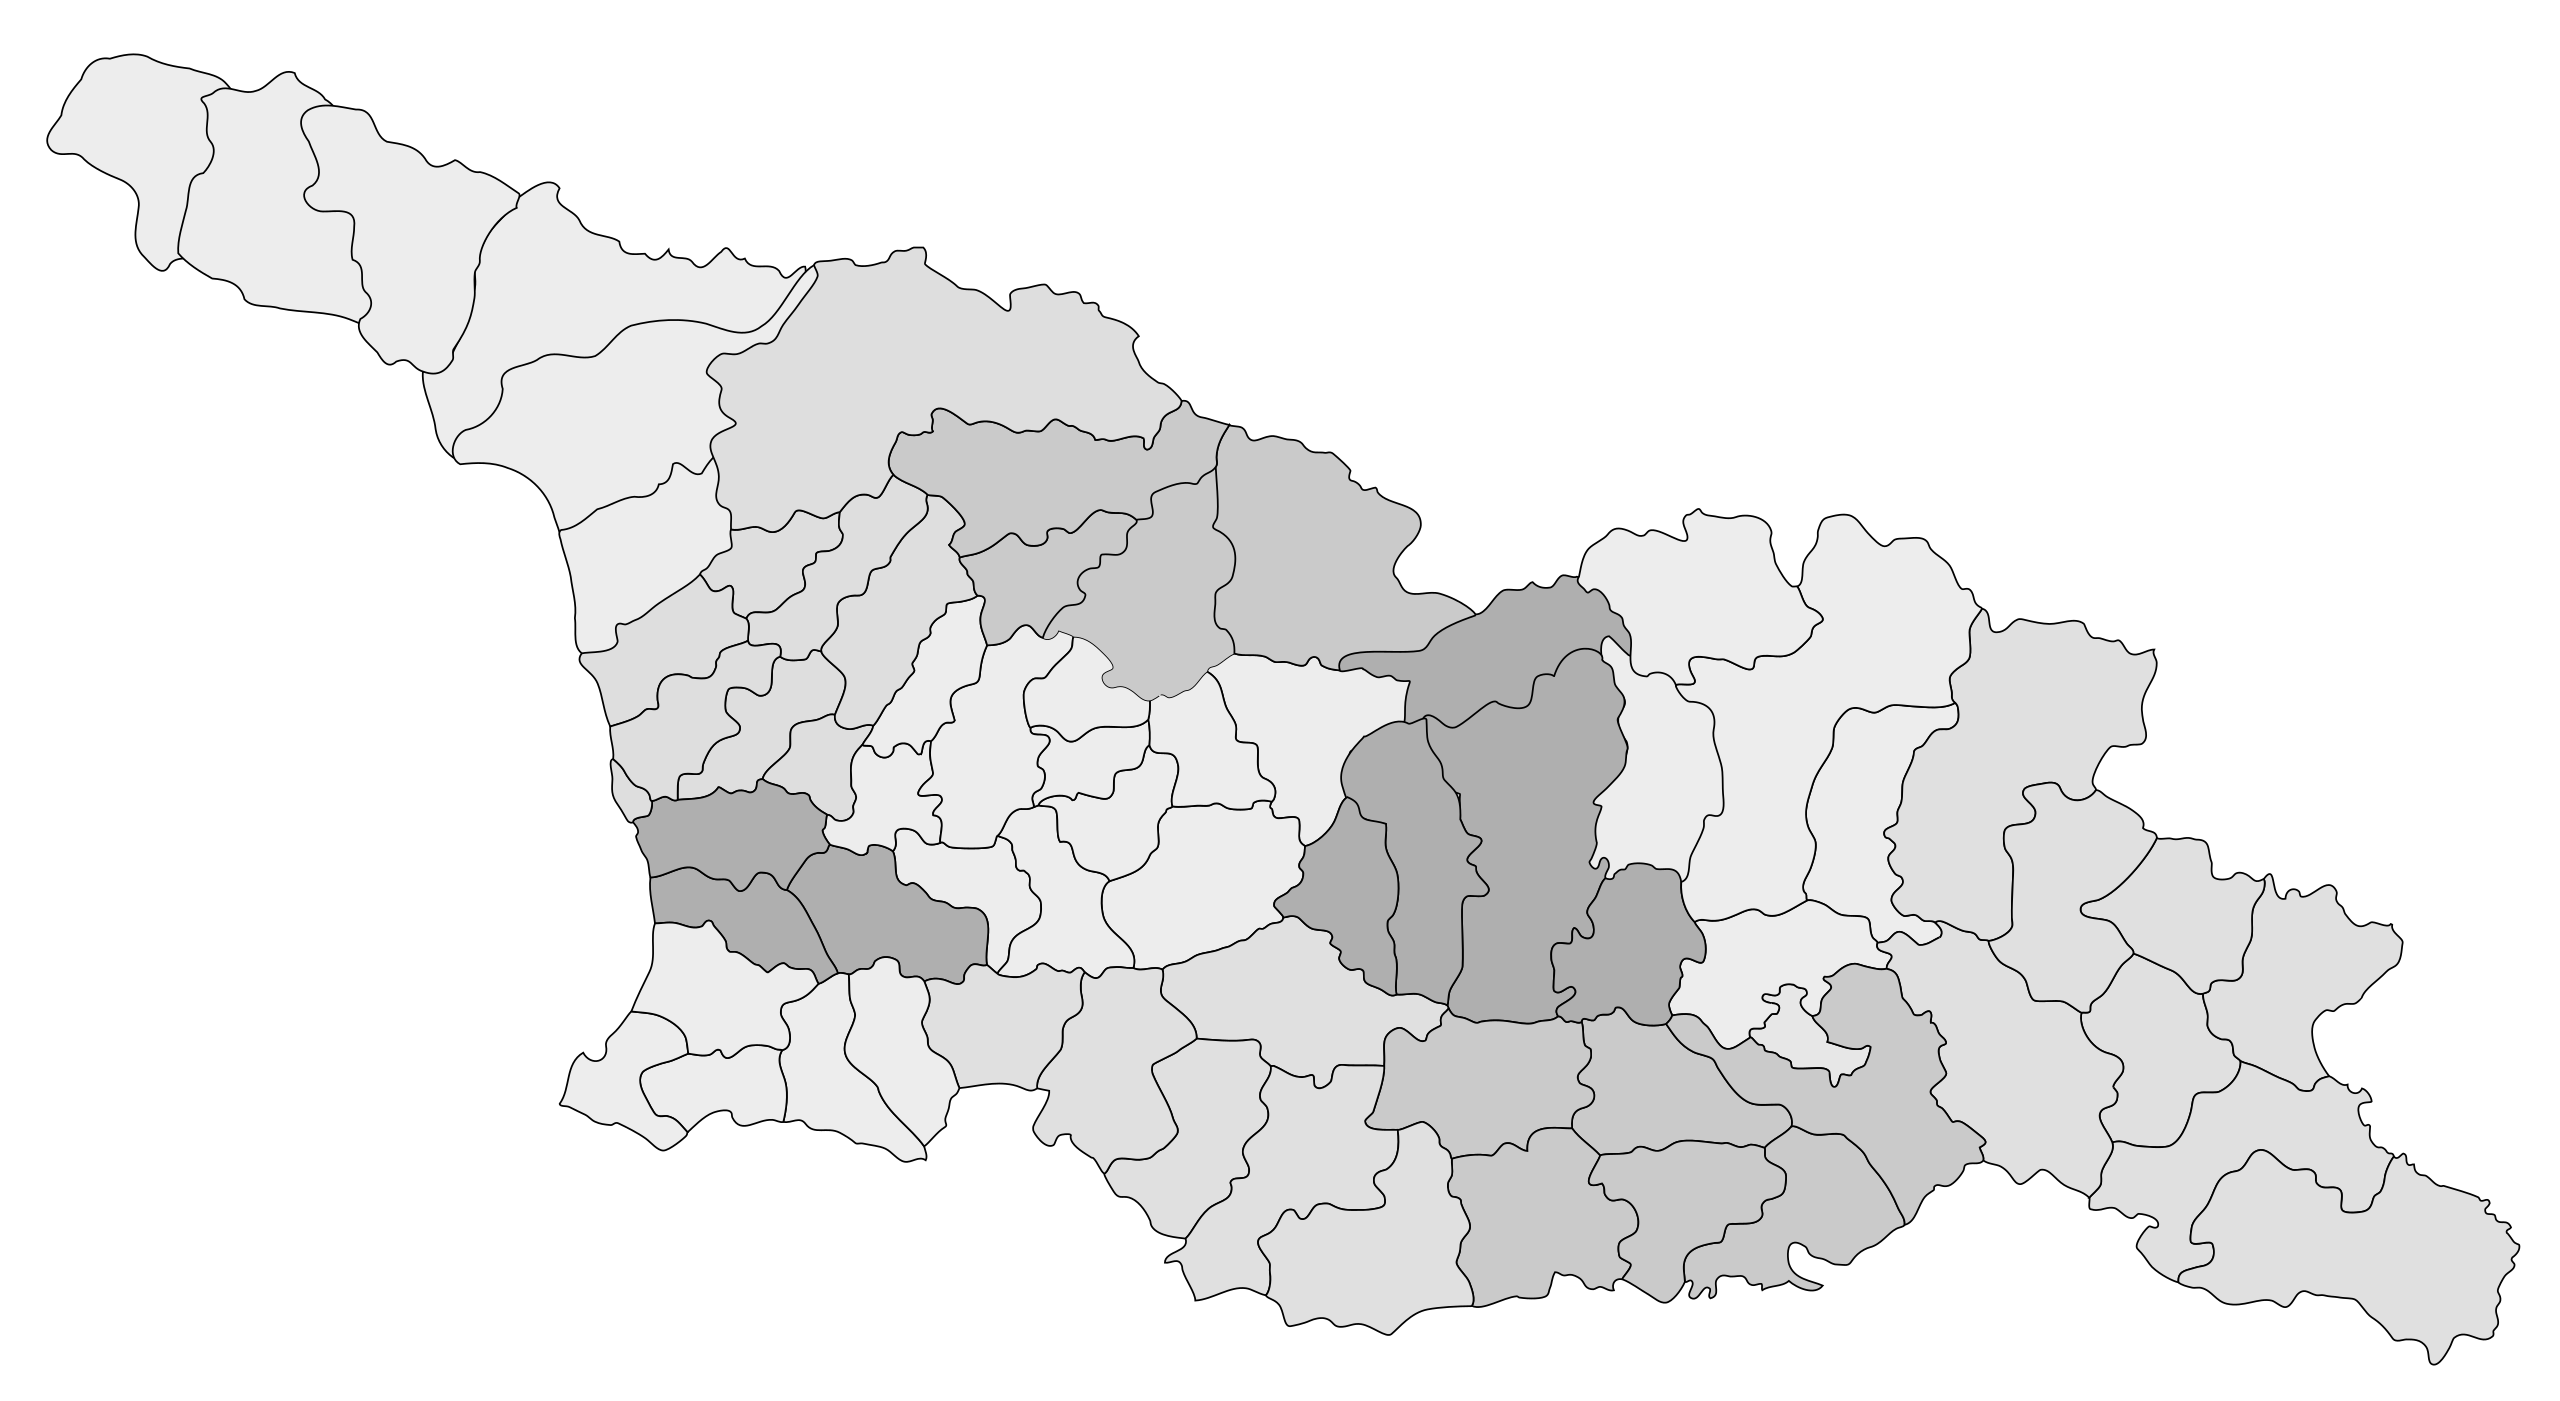 Filegeian municipalities with higlightened regions